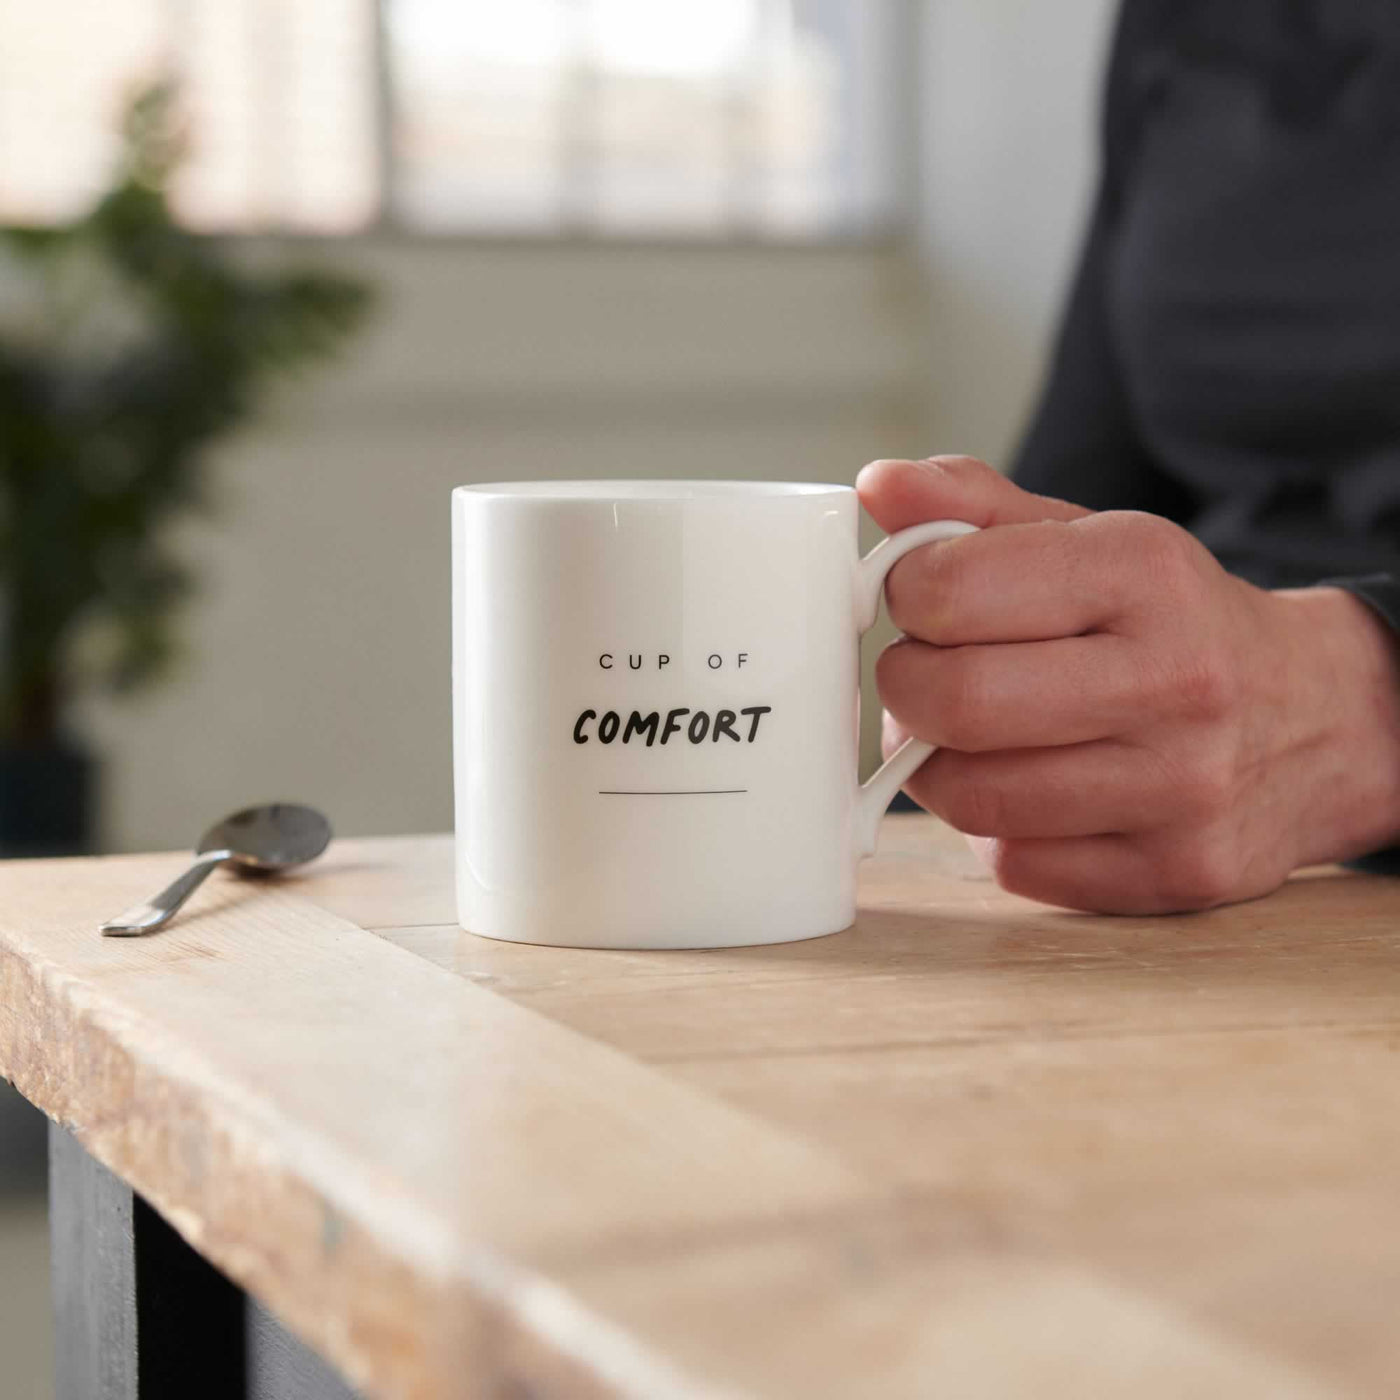 Cup of Comfort Mug on table with hand